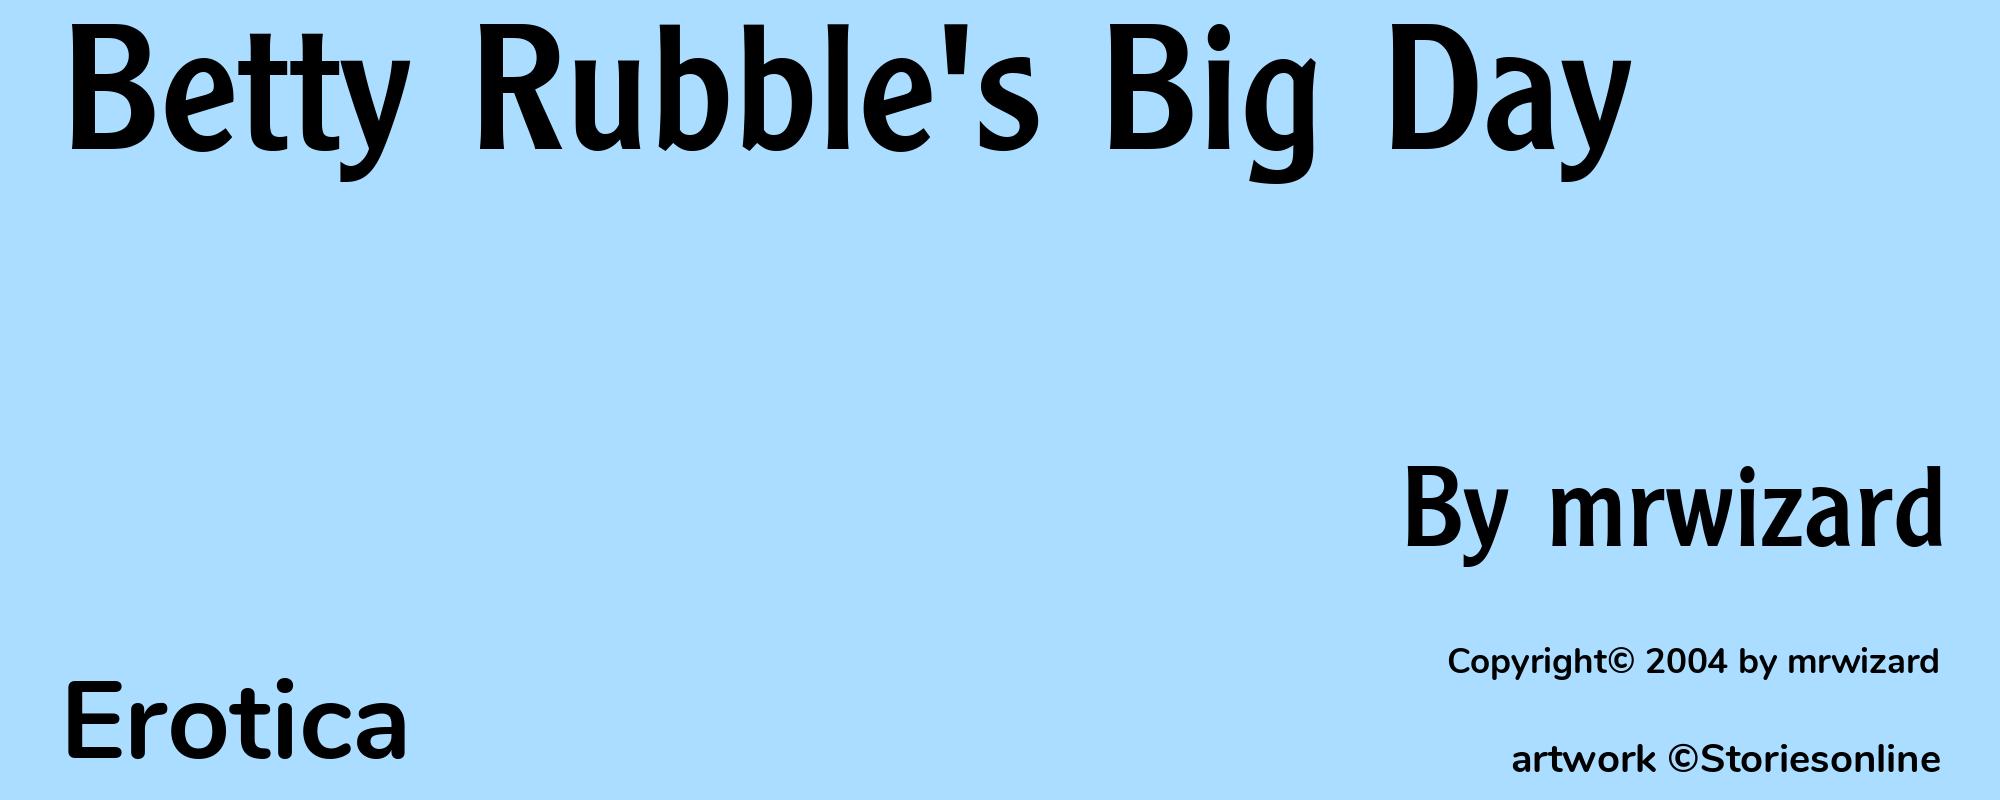 Betty Rubble's Big Day - Cover